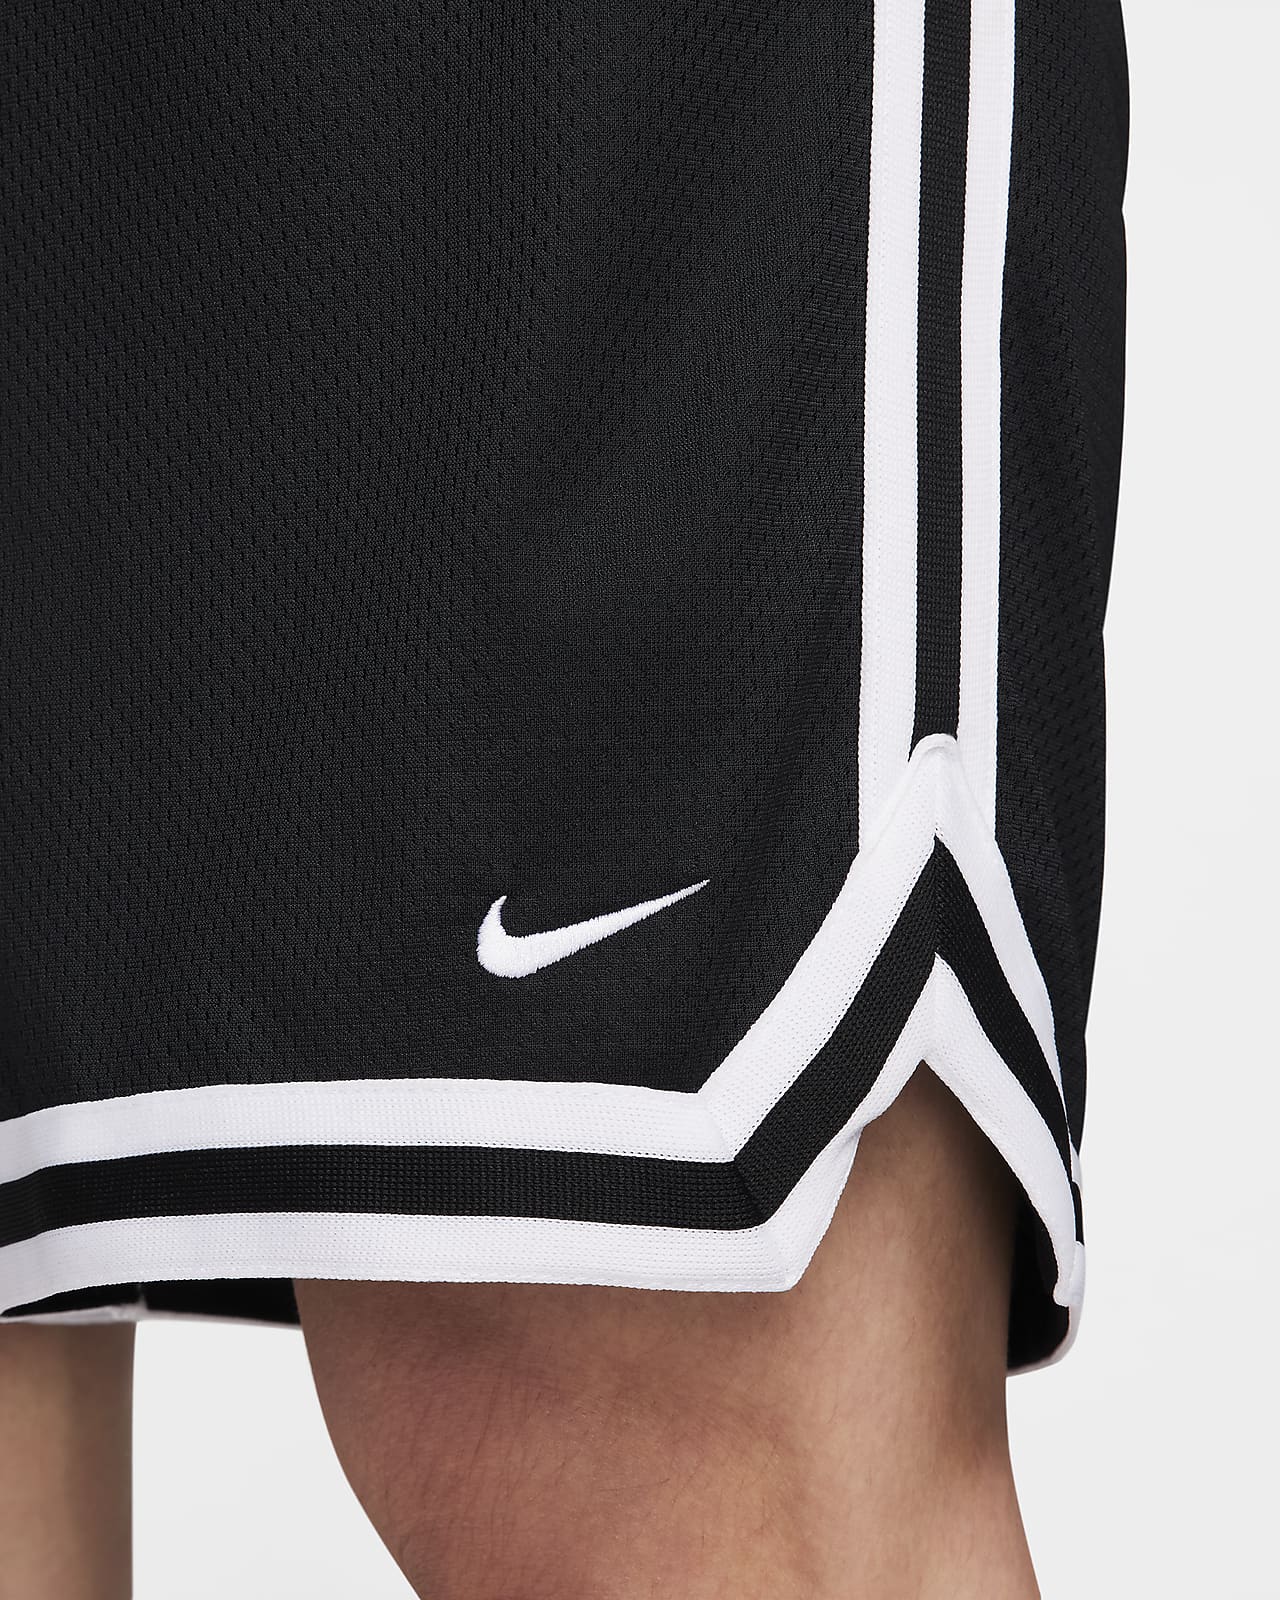 Nike DNA Men's Dri-FIT 8 Basketball Shorts.